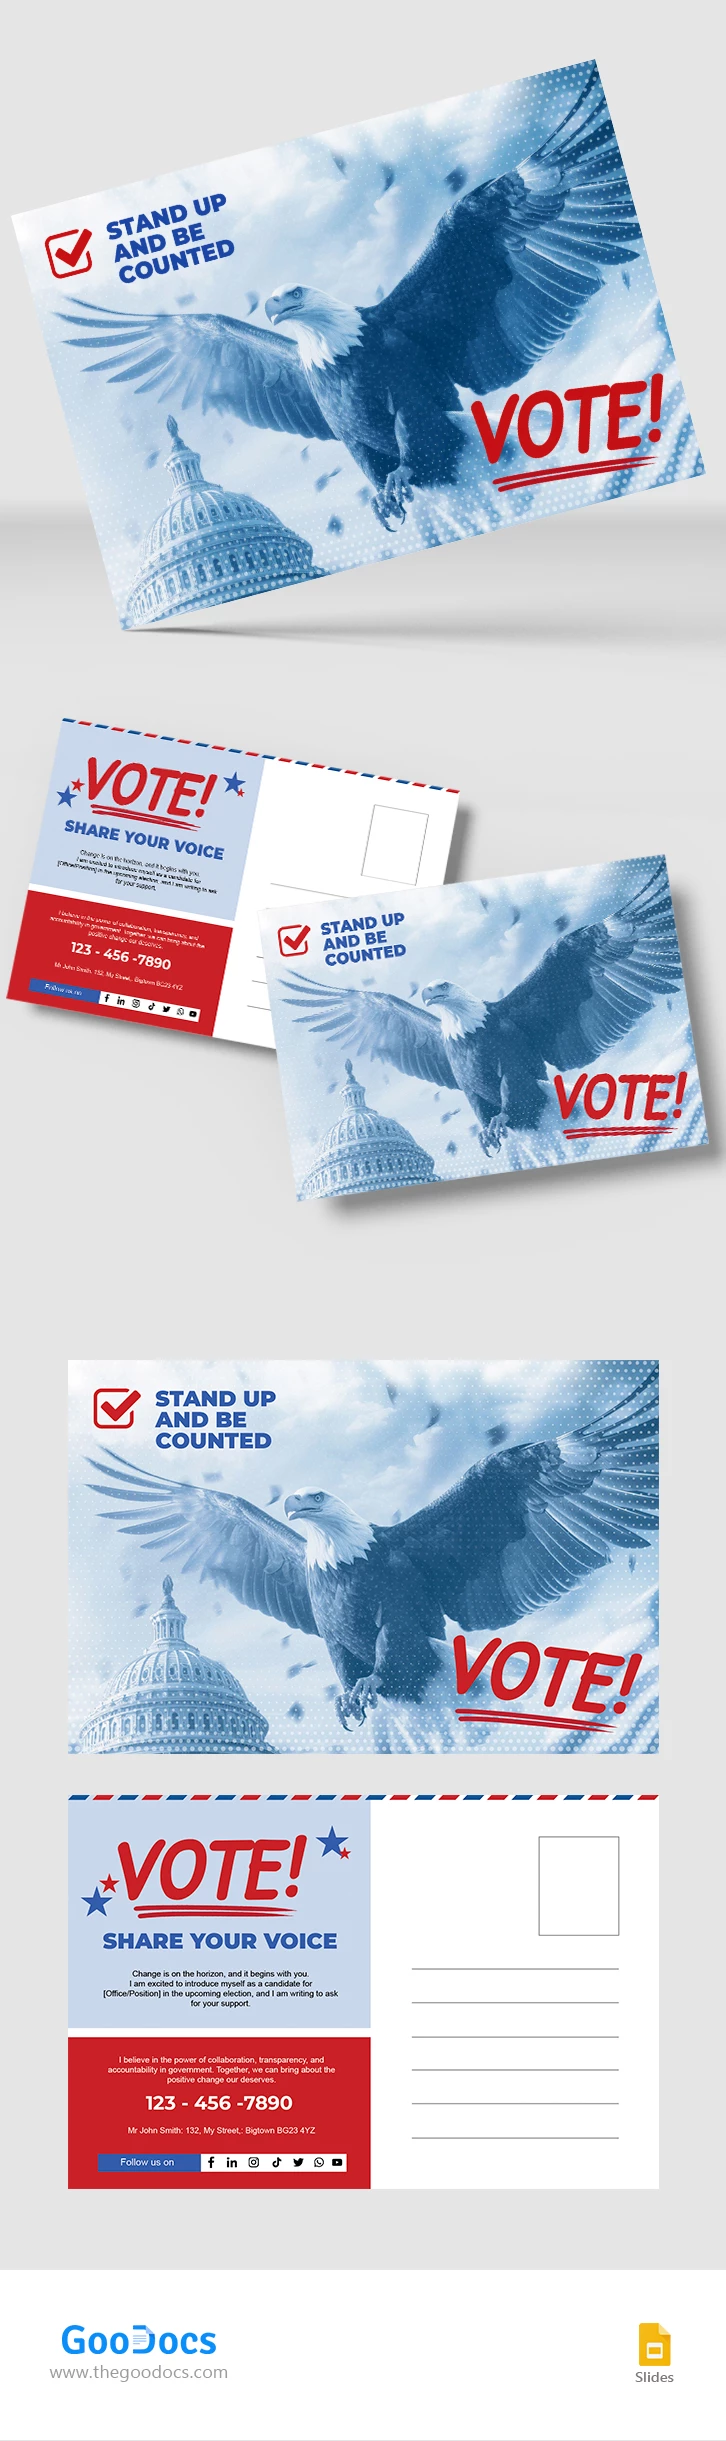 Carte postale politique - free Google Docs Template - 10067290